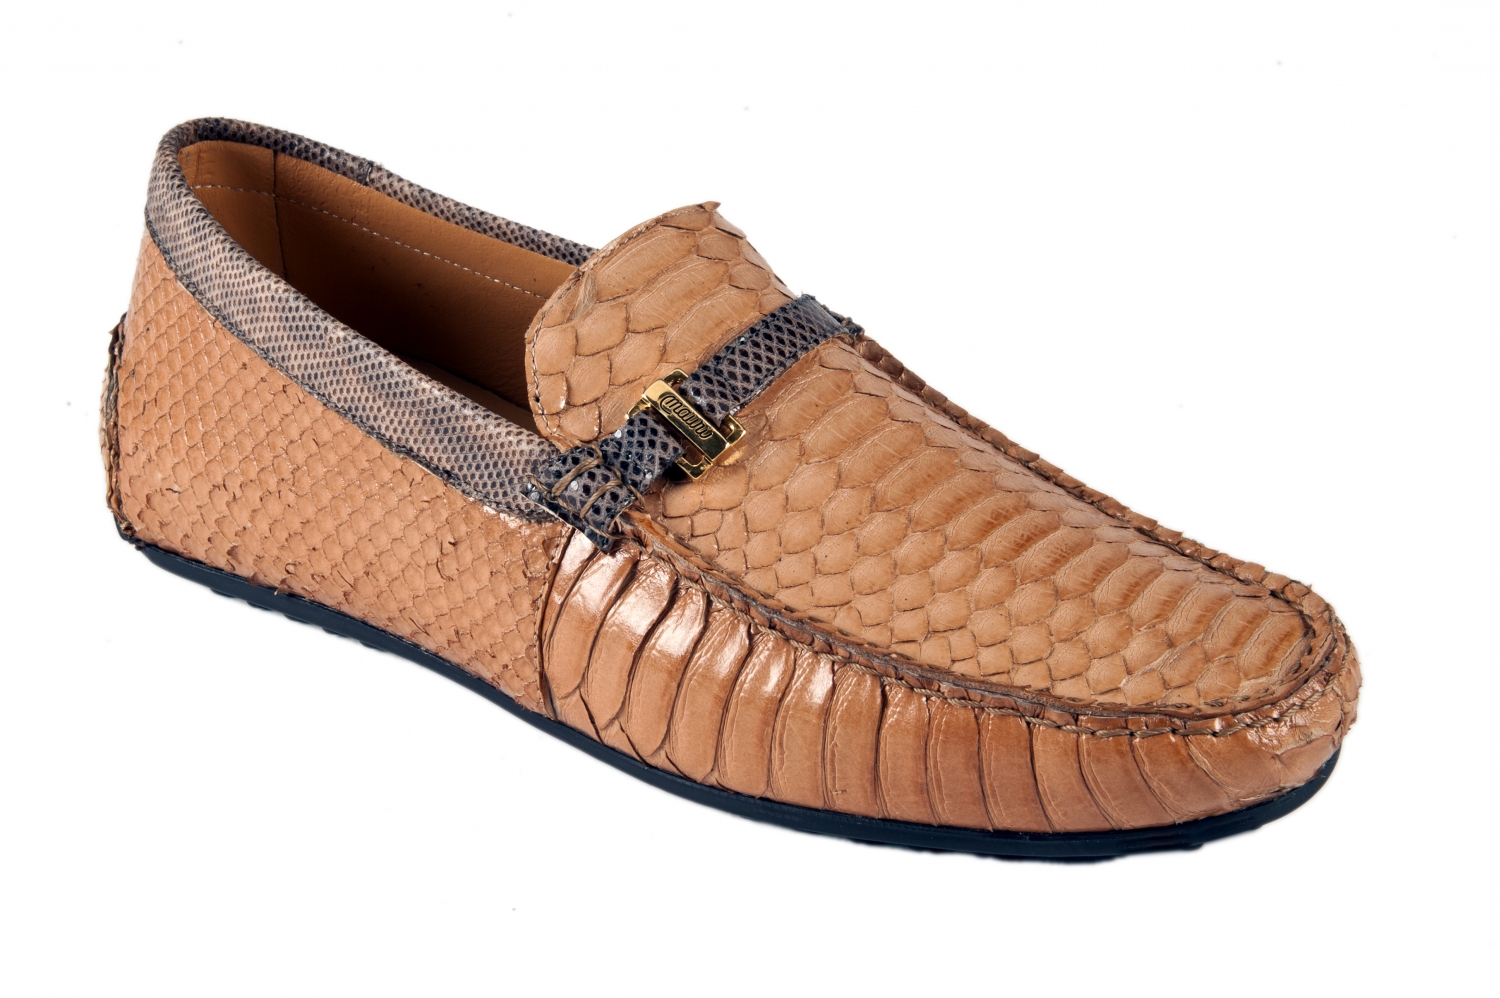 Mauri 3410 Dune / Brown Genuine Python/ Karung Loafer Shoes.